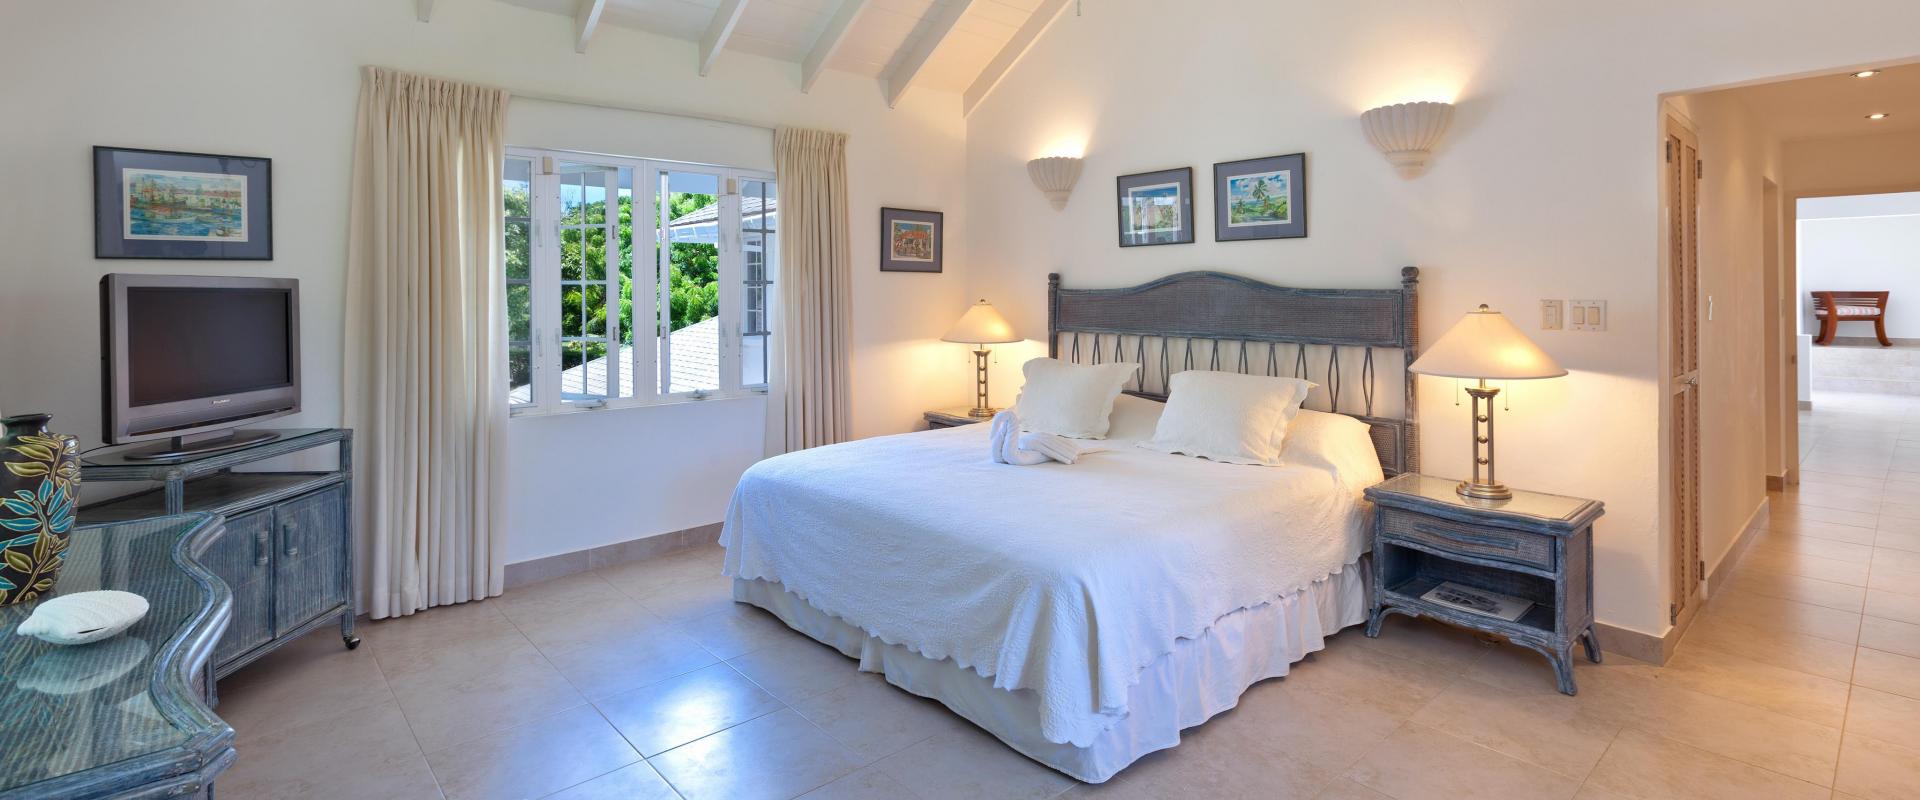 Barbados Holiday Rental Rose Of Sharon Sandy Lane Bedroom 1